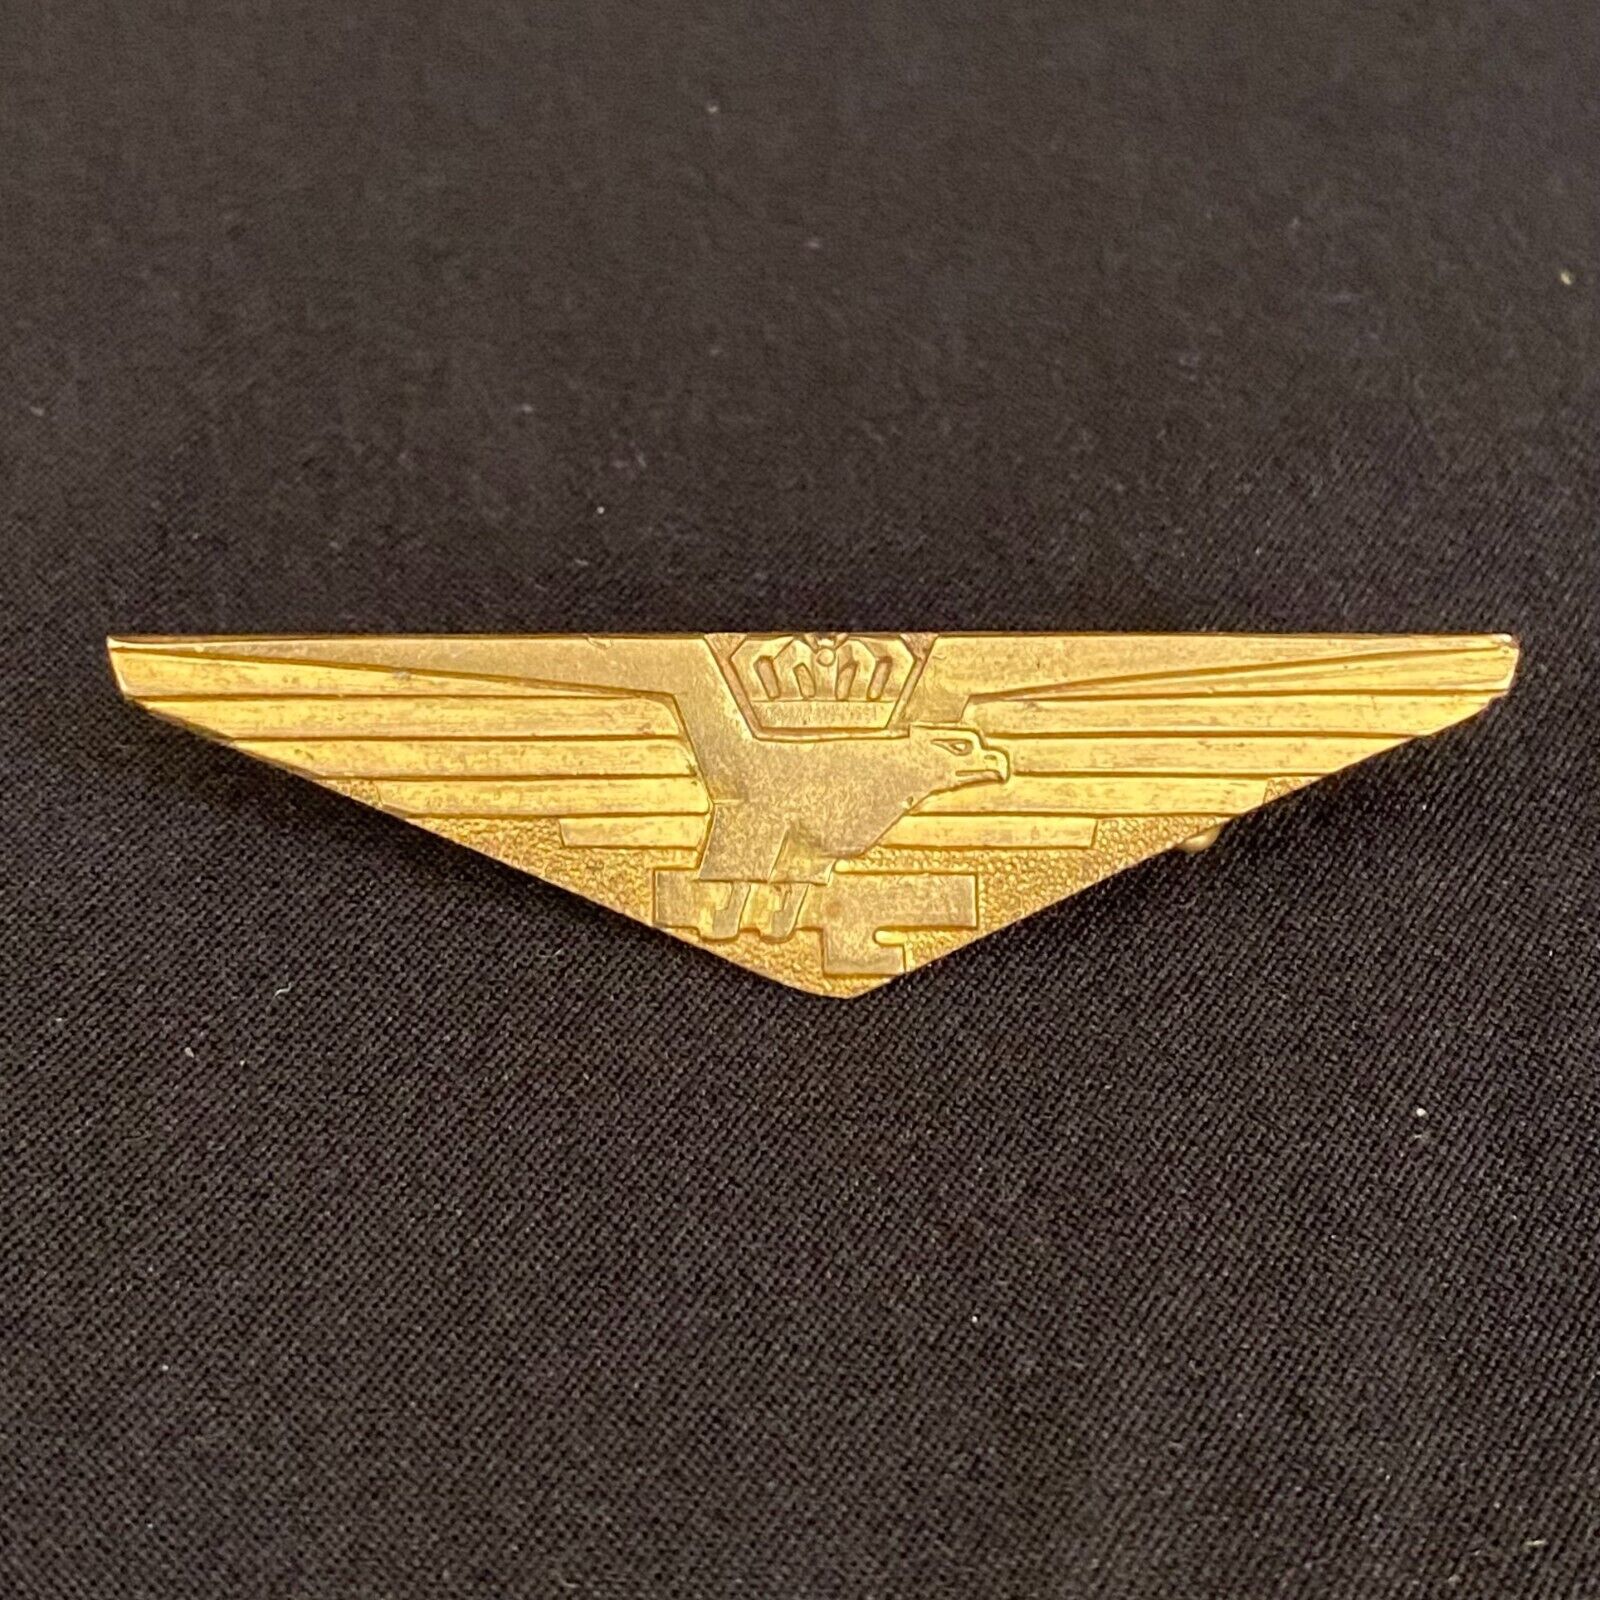 Rare WW2 Italy Aviator Original Pin Badge - 001624